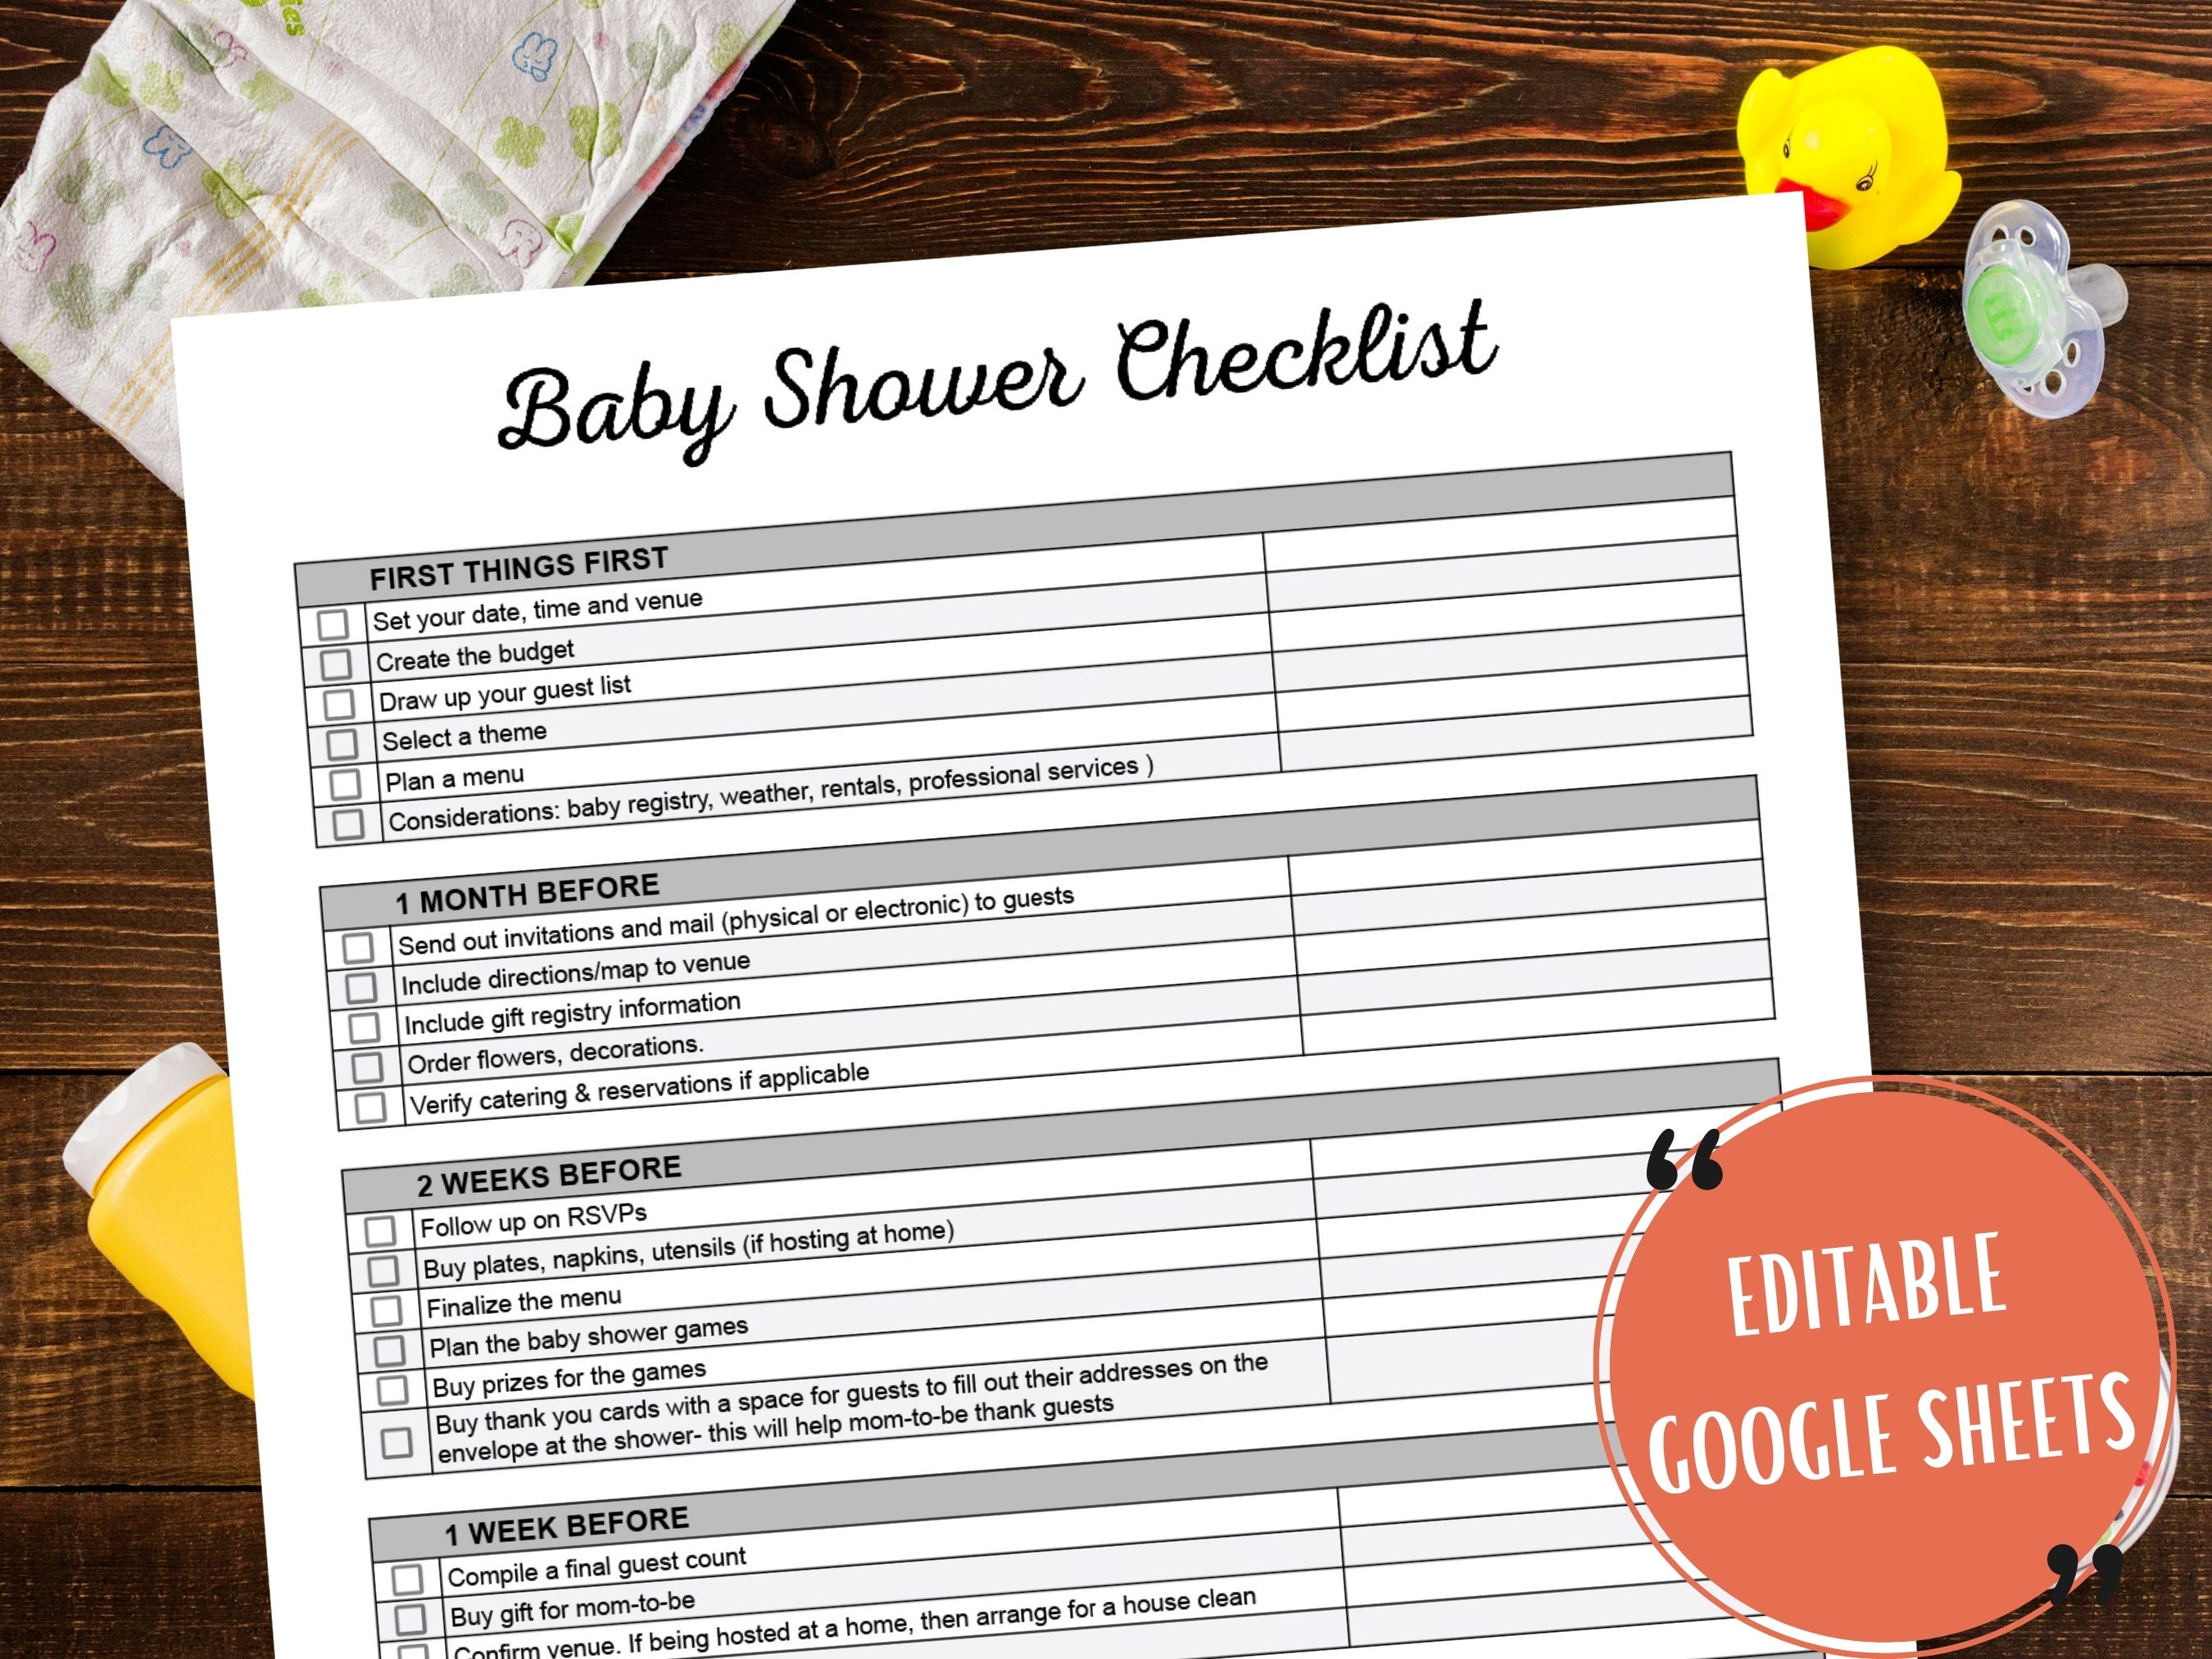 Baby Shower Checklist, Editable Google Sheets Template, Customizable